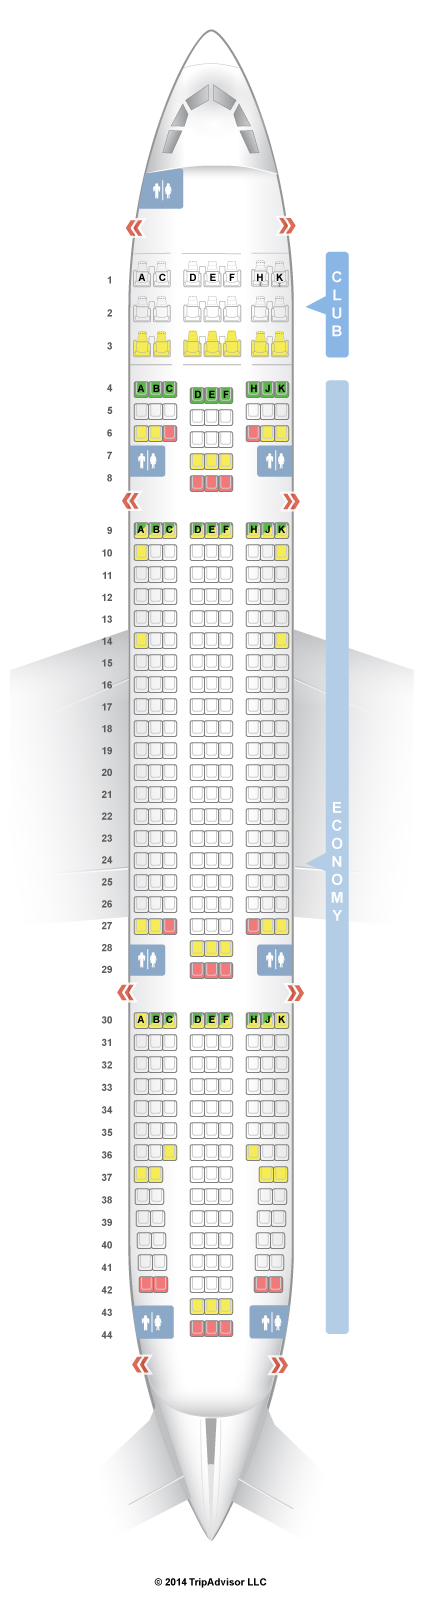 Air Transat Seating Chart A330 200